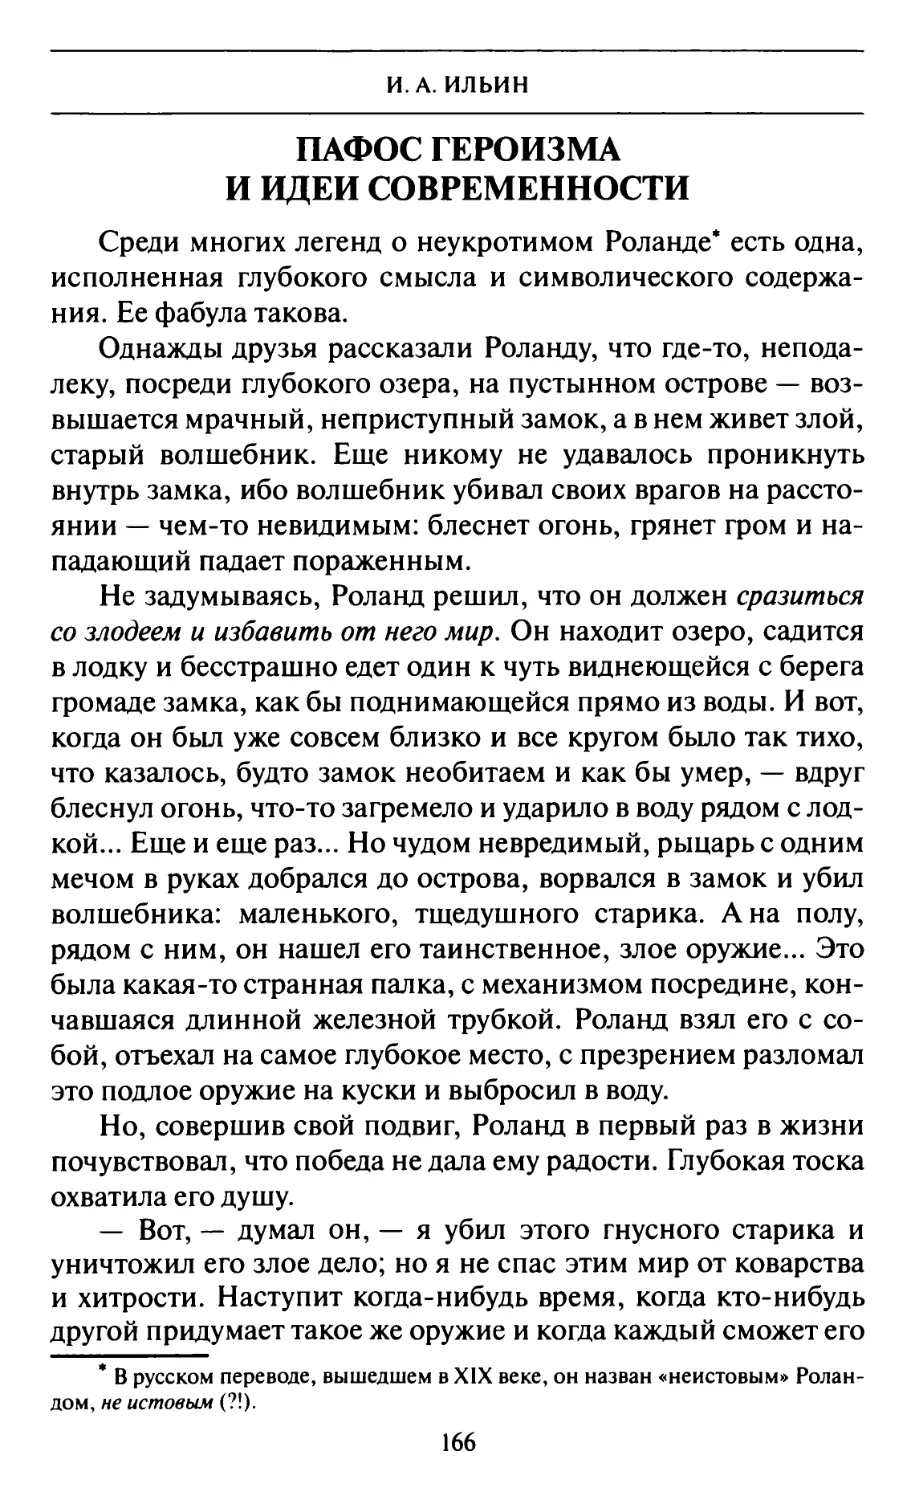 H.A. Цуриков. Пафос героизма и идеи современности